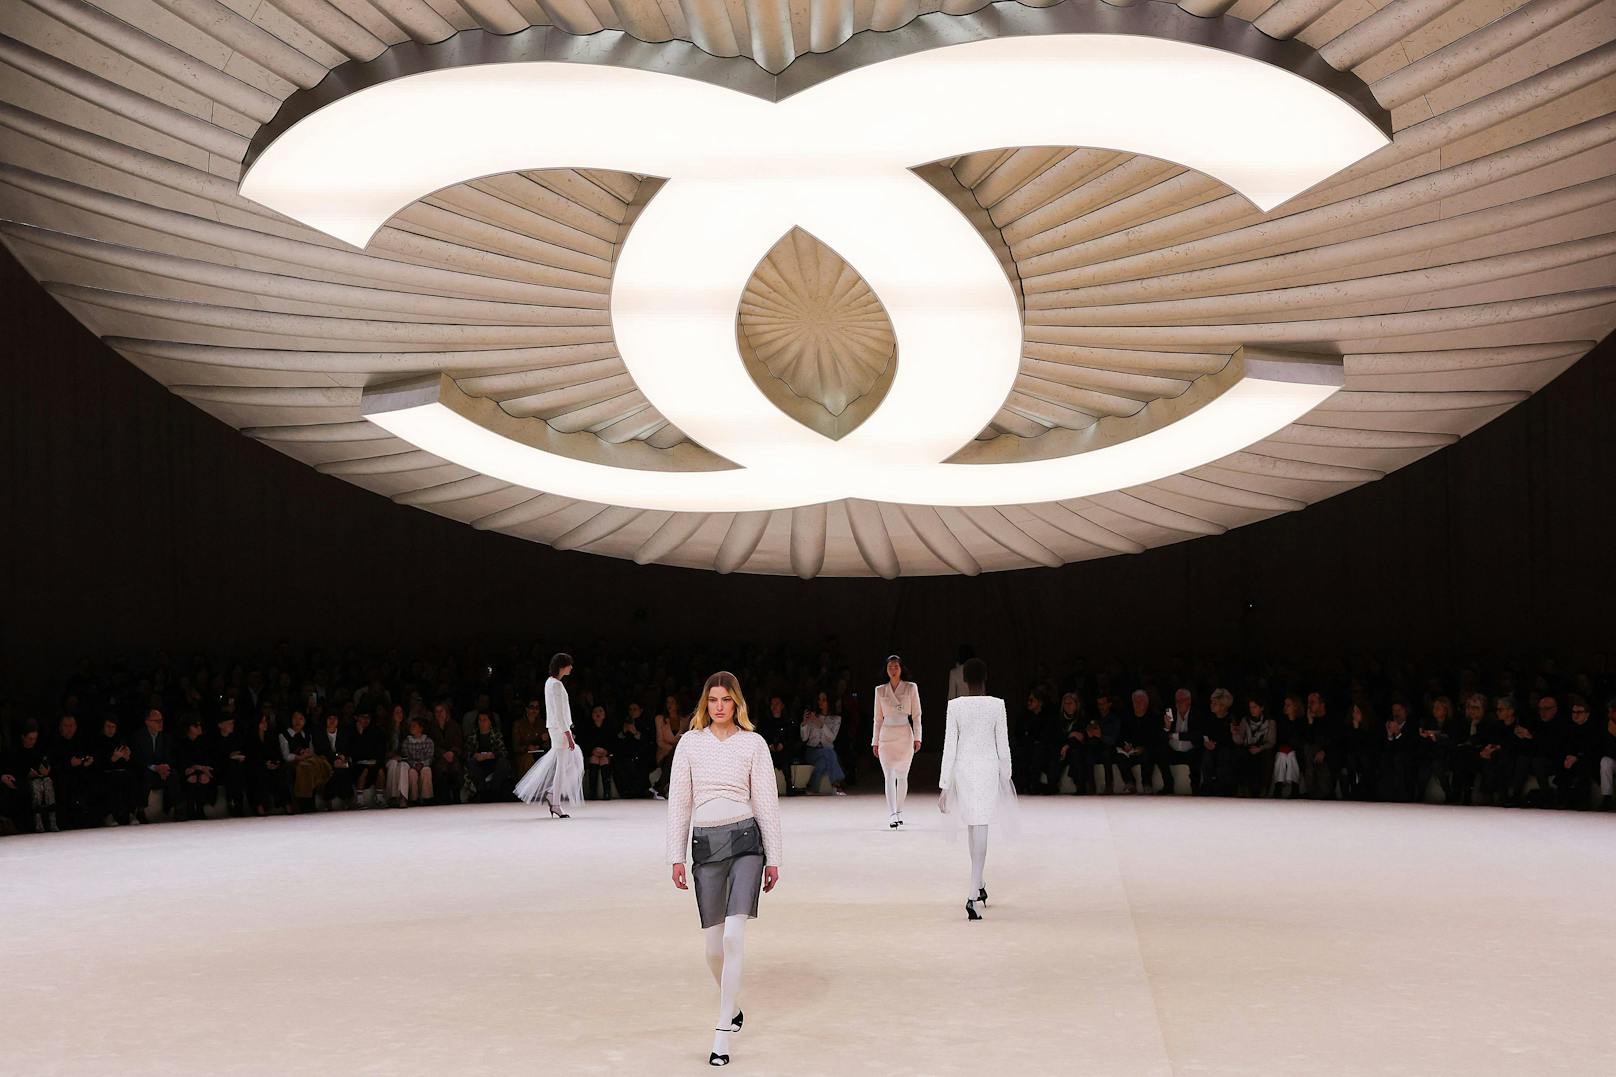 Die gesamte Show fand übrigens im Grand Palais Éphémère unter dem berühmten Chanel-Knopf statt.